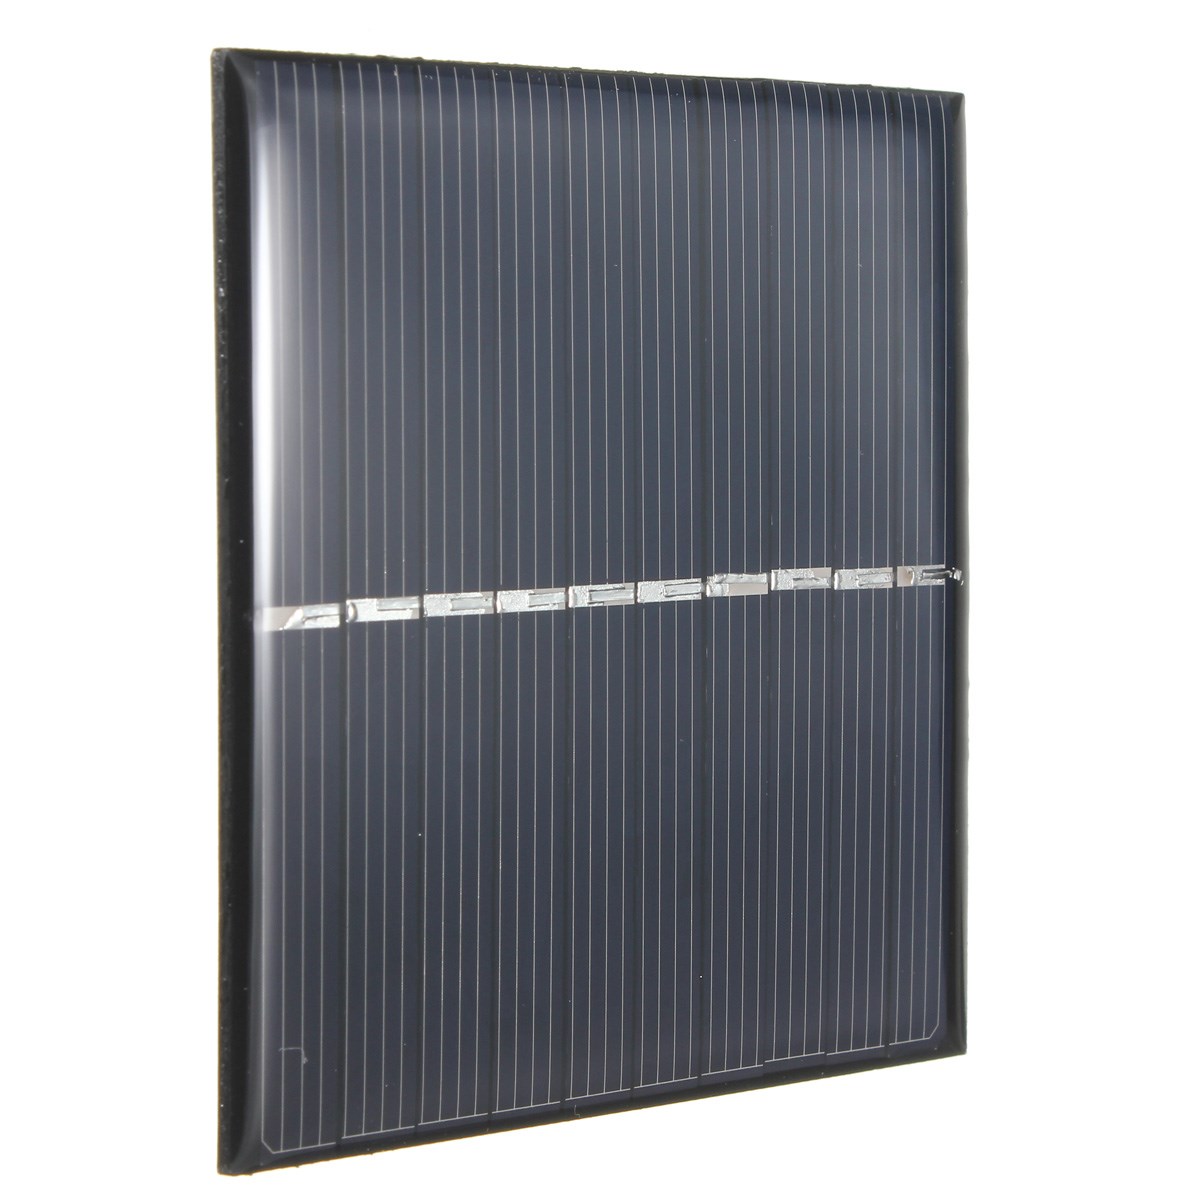 Hot Sale 5V 0.8W 160MA Polycrystalline Silicon Epoxy Solar Panels DIY Solar Module System mini Solar Cells phone battery Charger